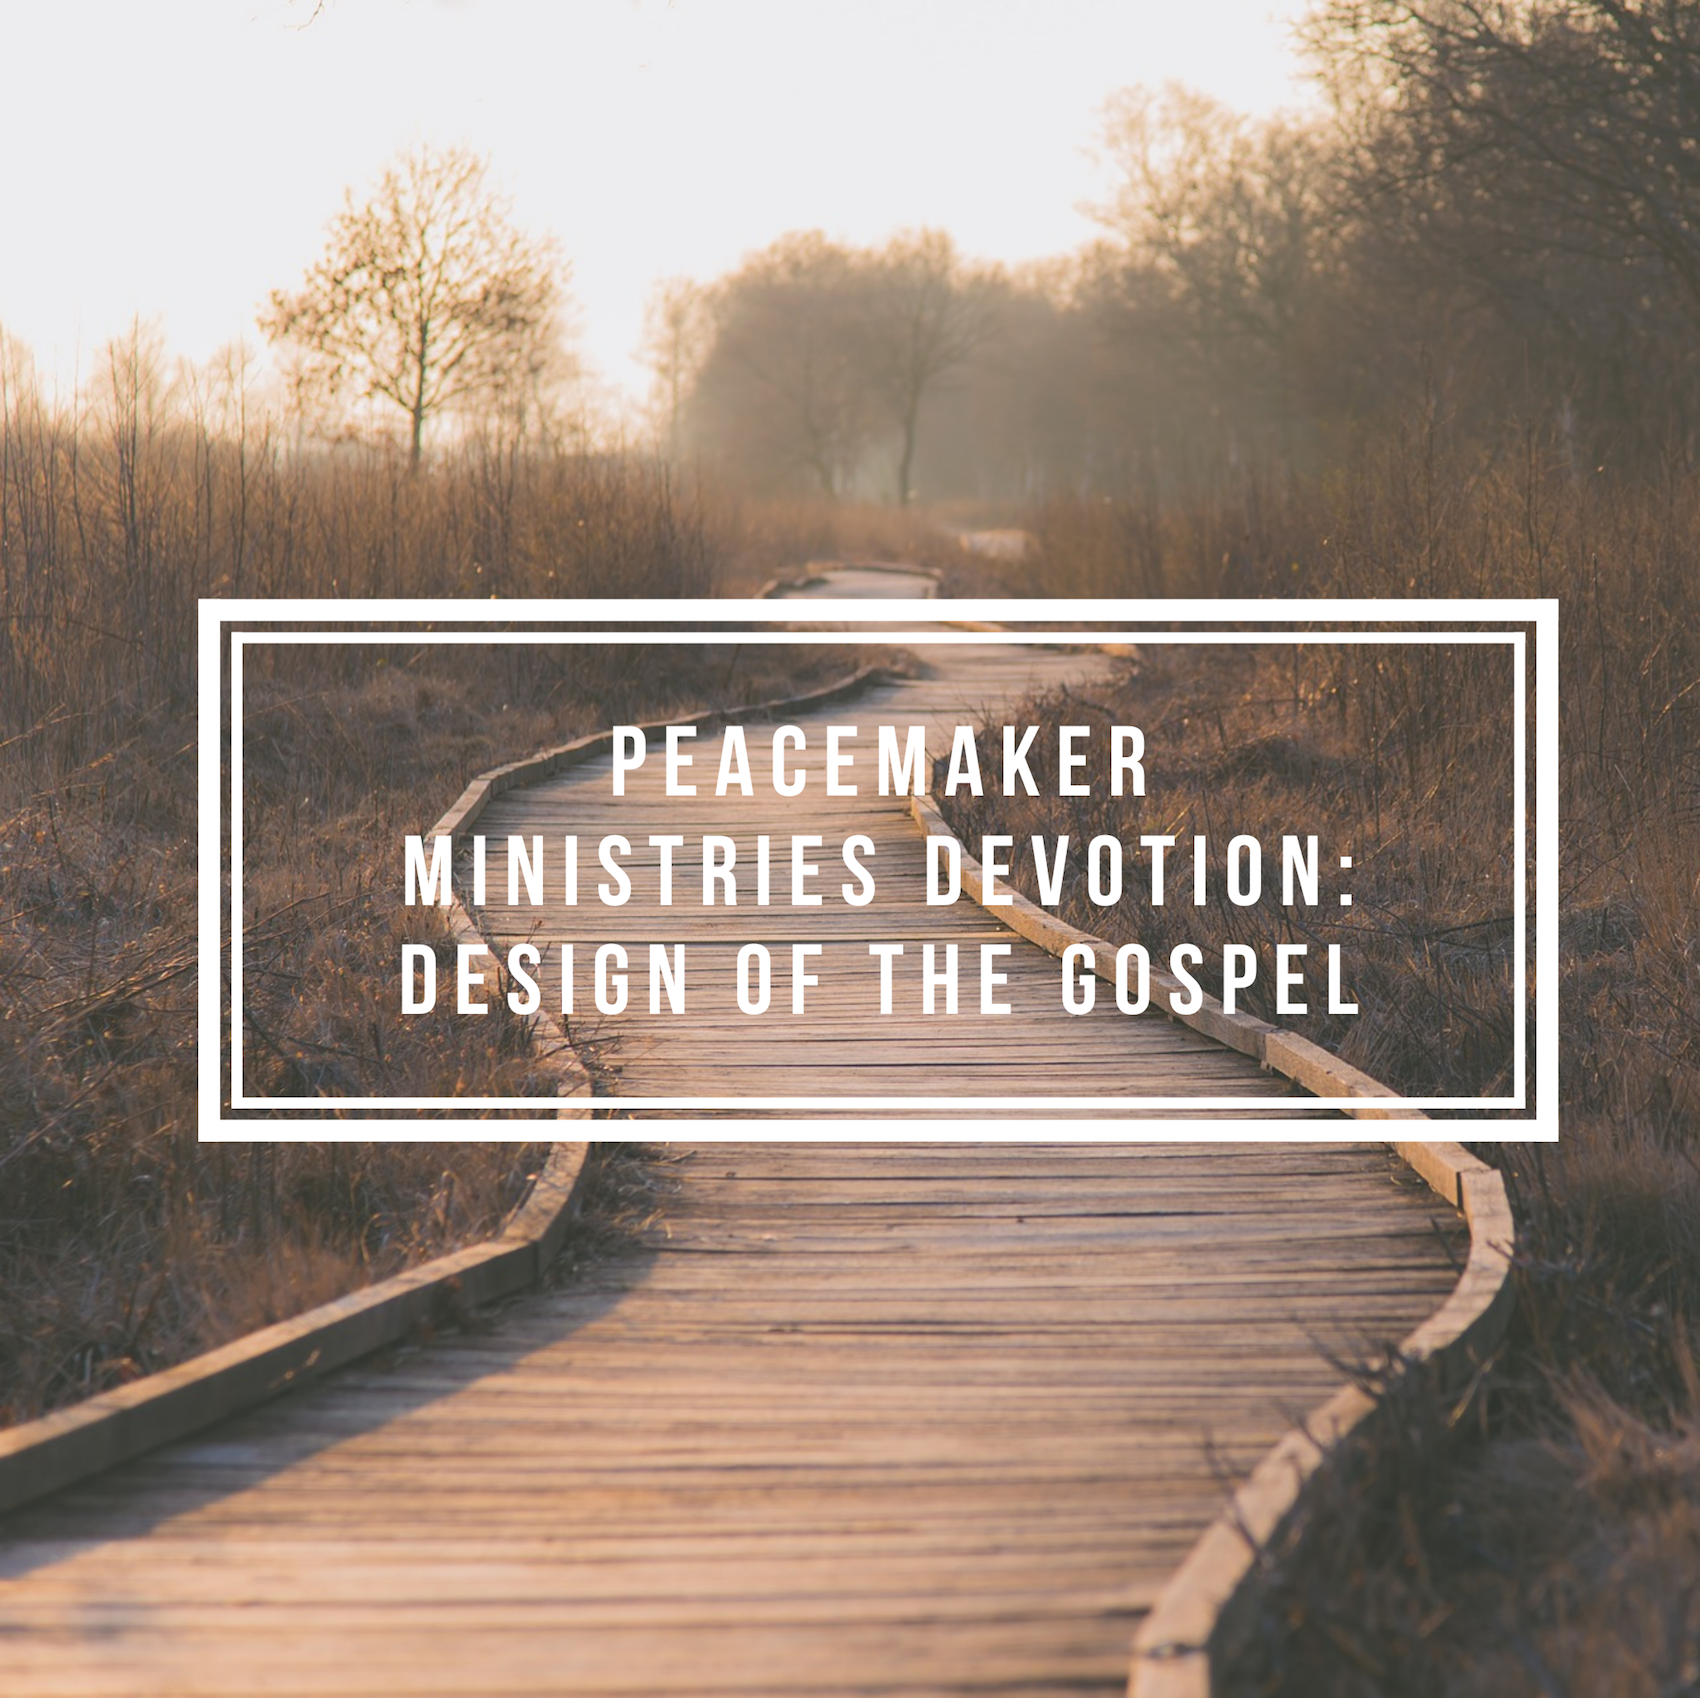 Peacemaker Ministries Devotion: Design of the Gospel